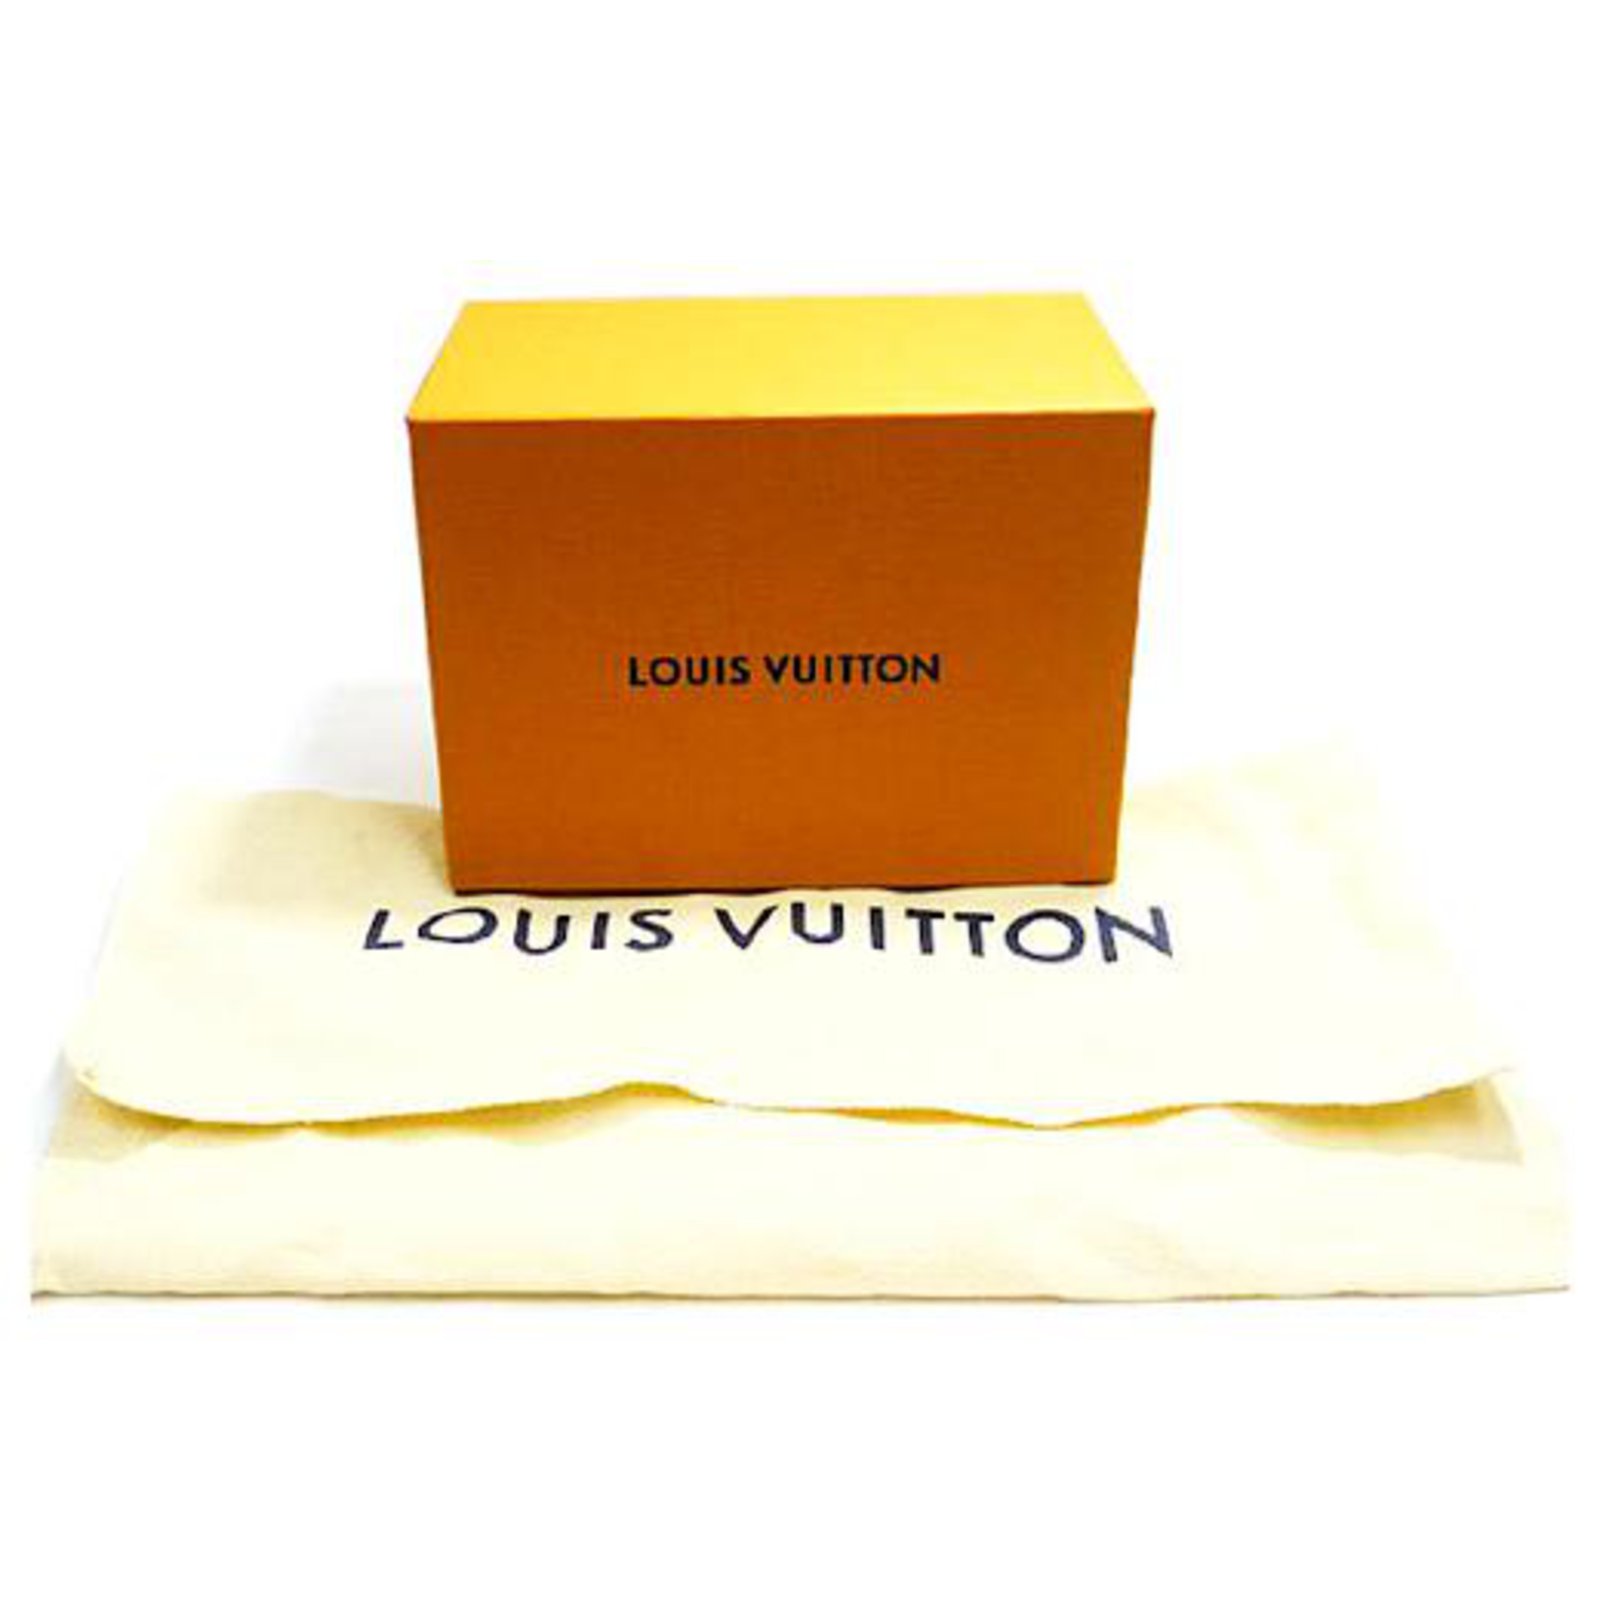 Louis Vuitton Brand new 2020 Daily Multi Pocket 30mm Belt Size 80